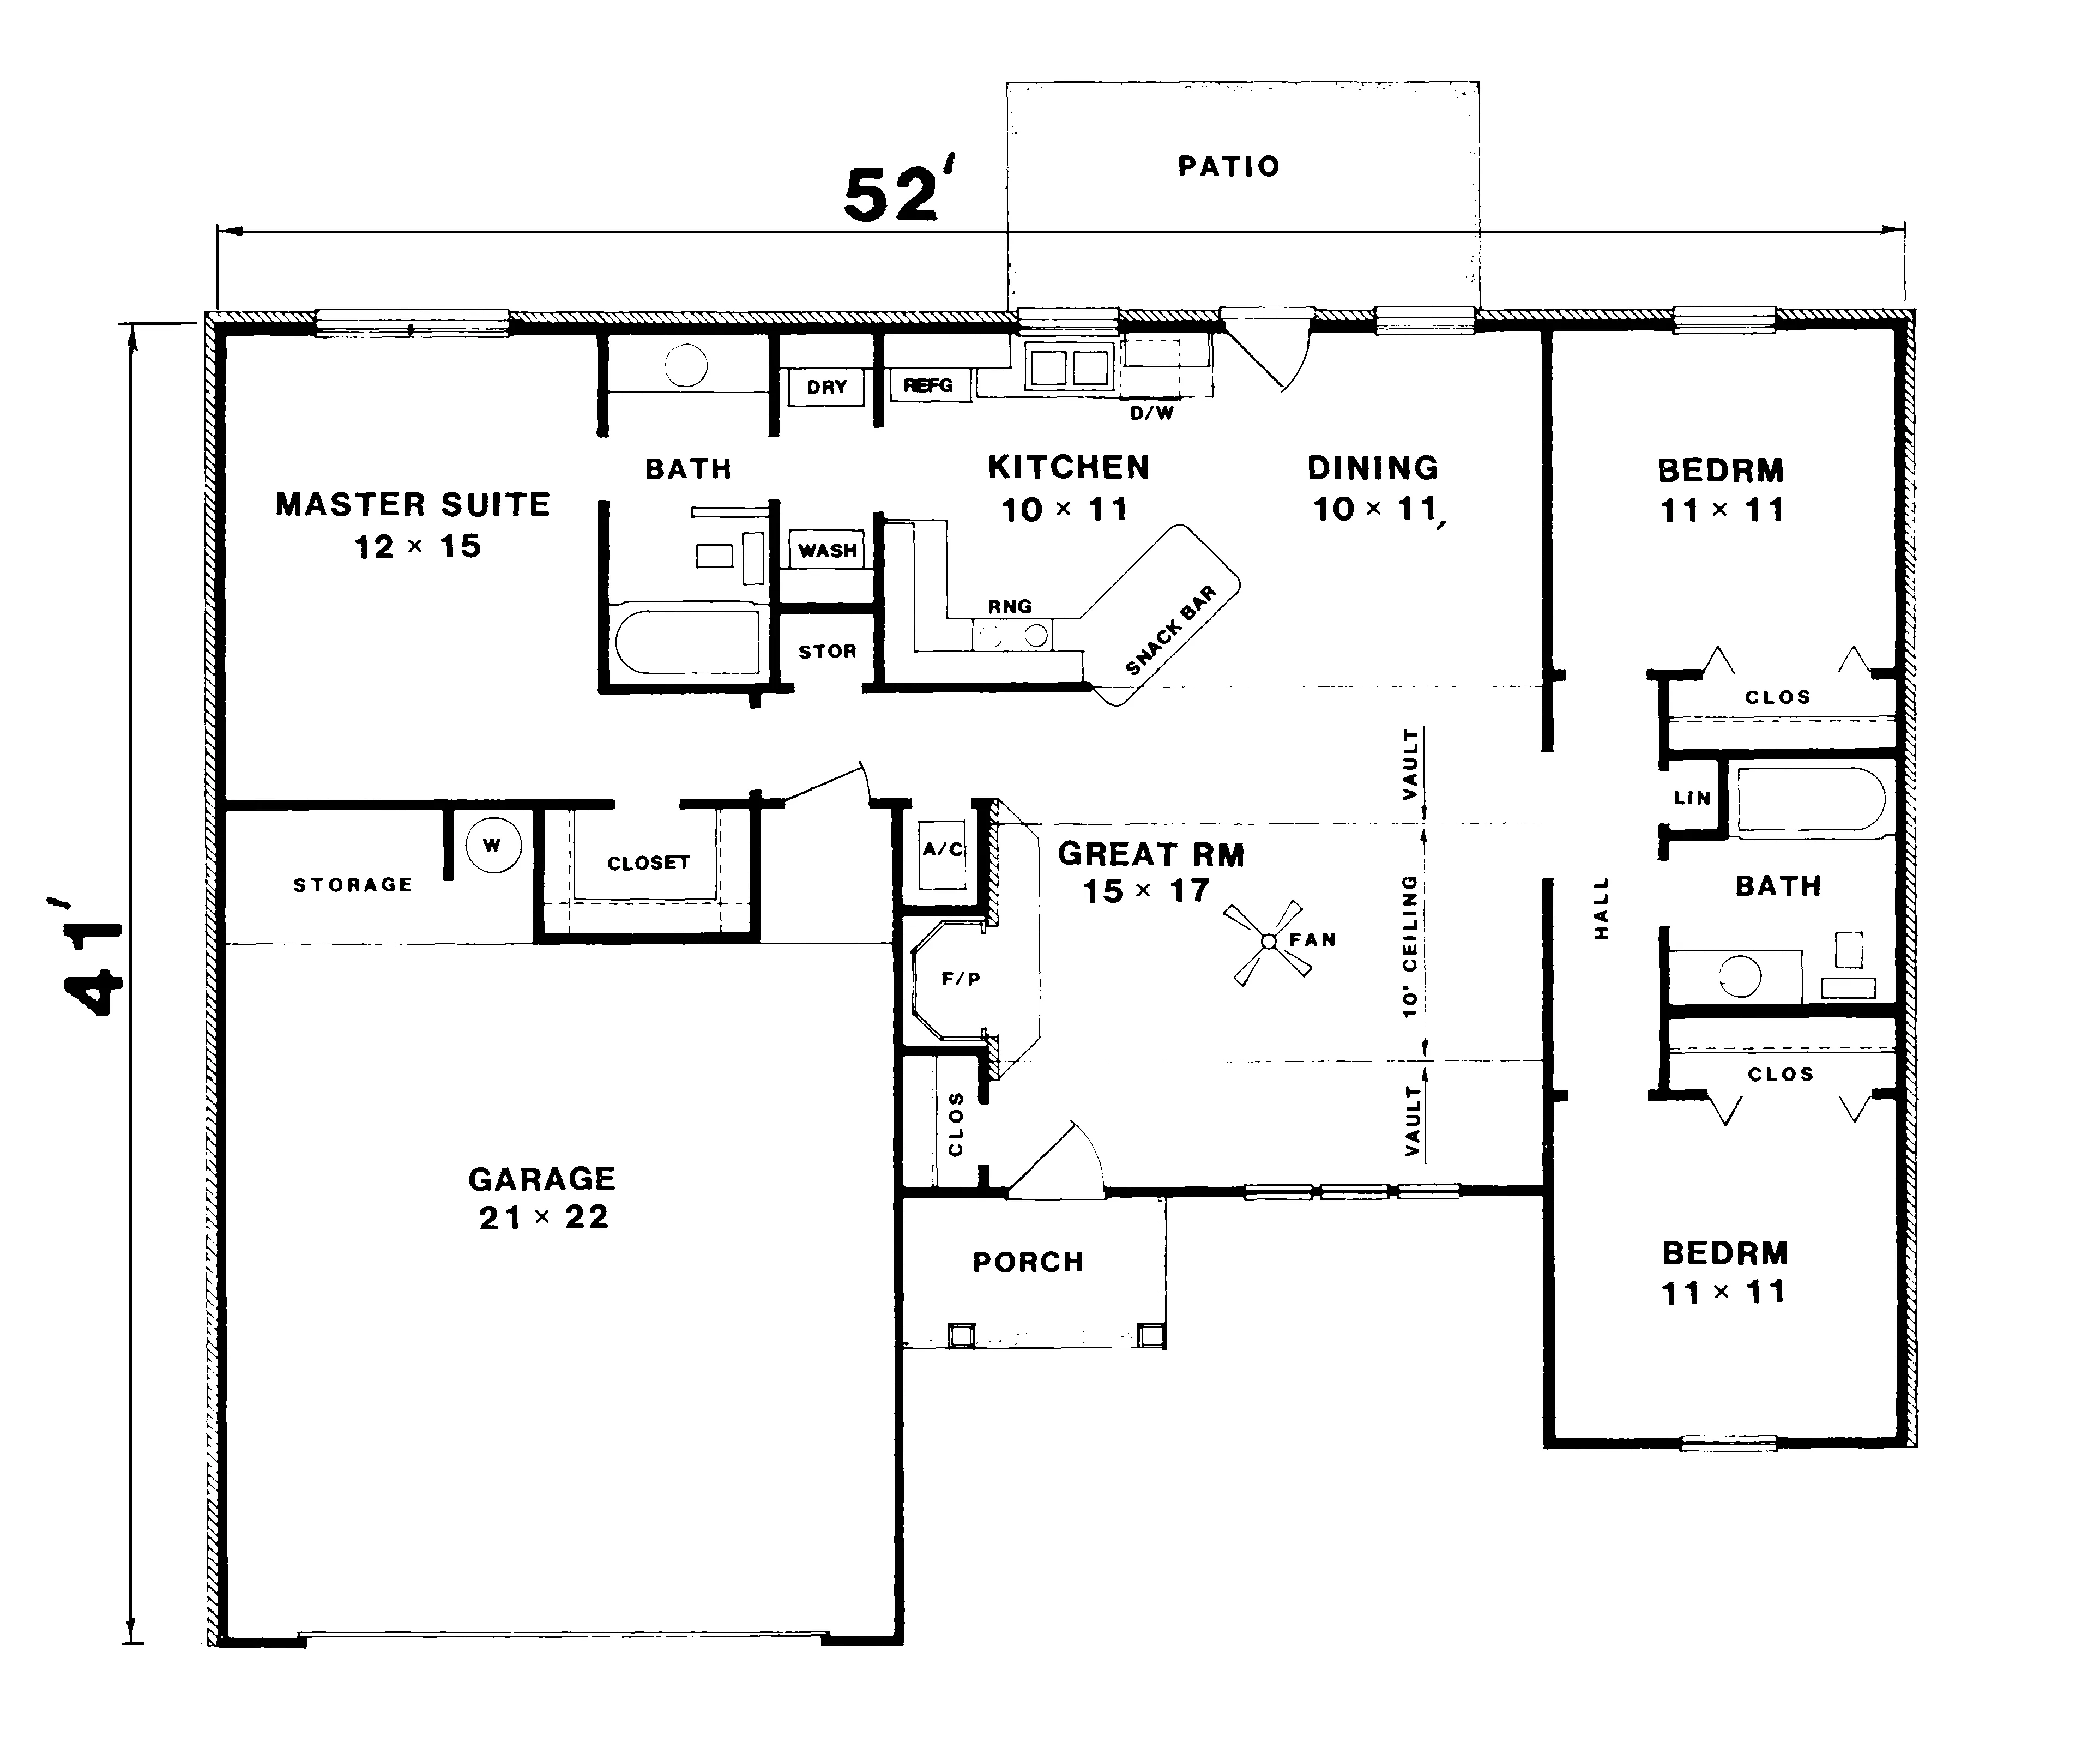 Ranch House Plan First Floor - Taft Sunbelt Ranch Home 069D-0003 - Shop House Plans and More